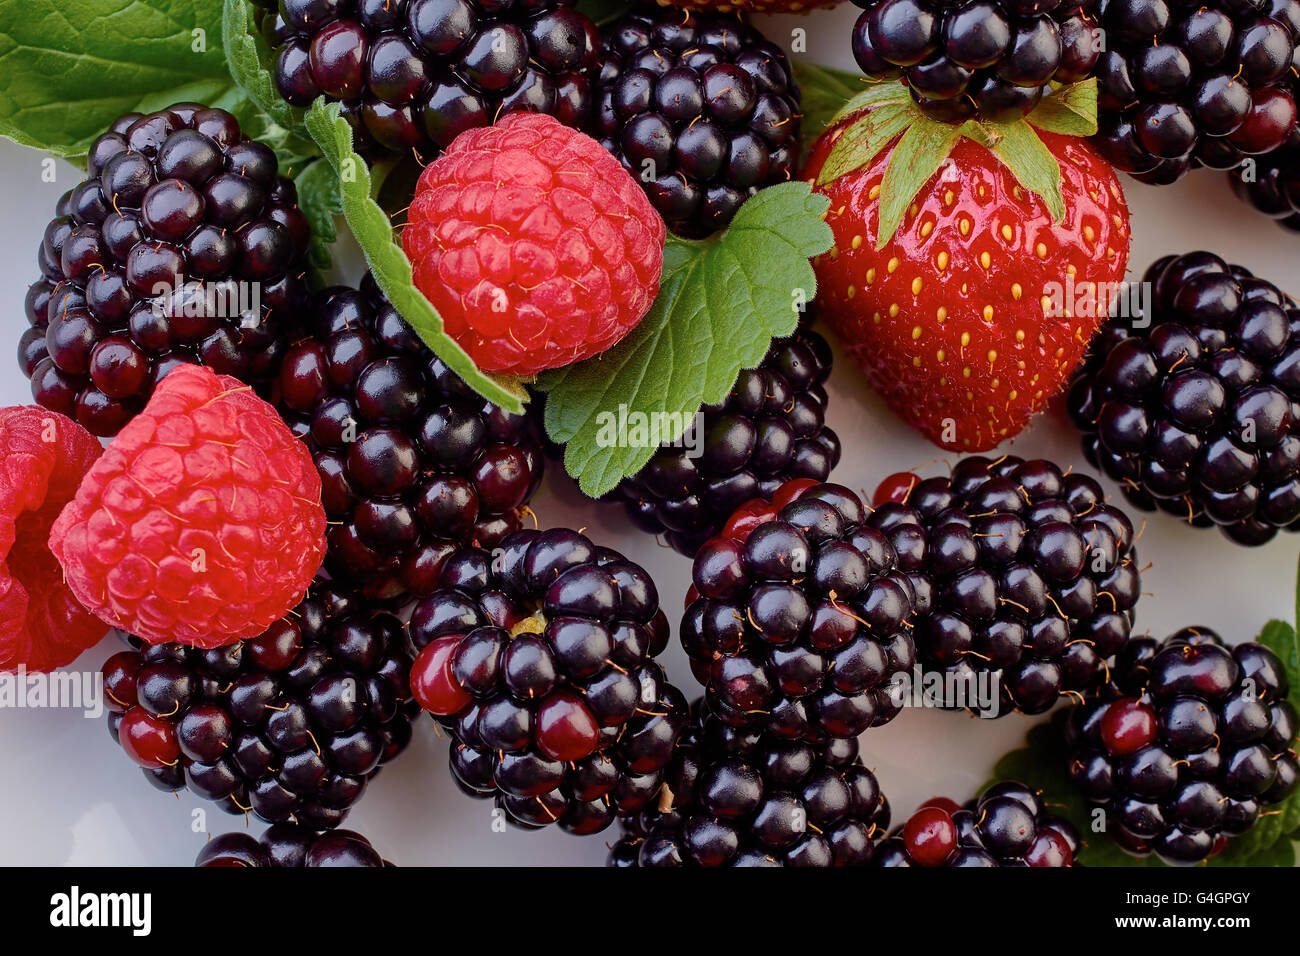 Heap of blackberries, strawberries and raspberries with mint leaves Stock Photo